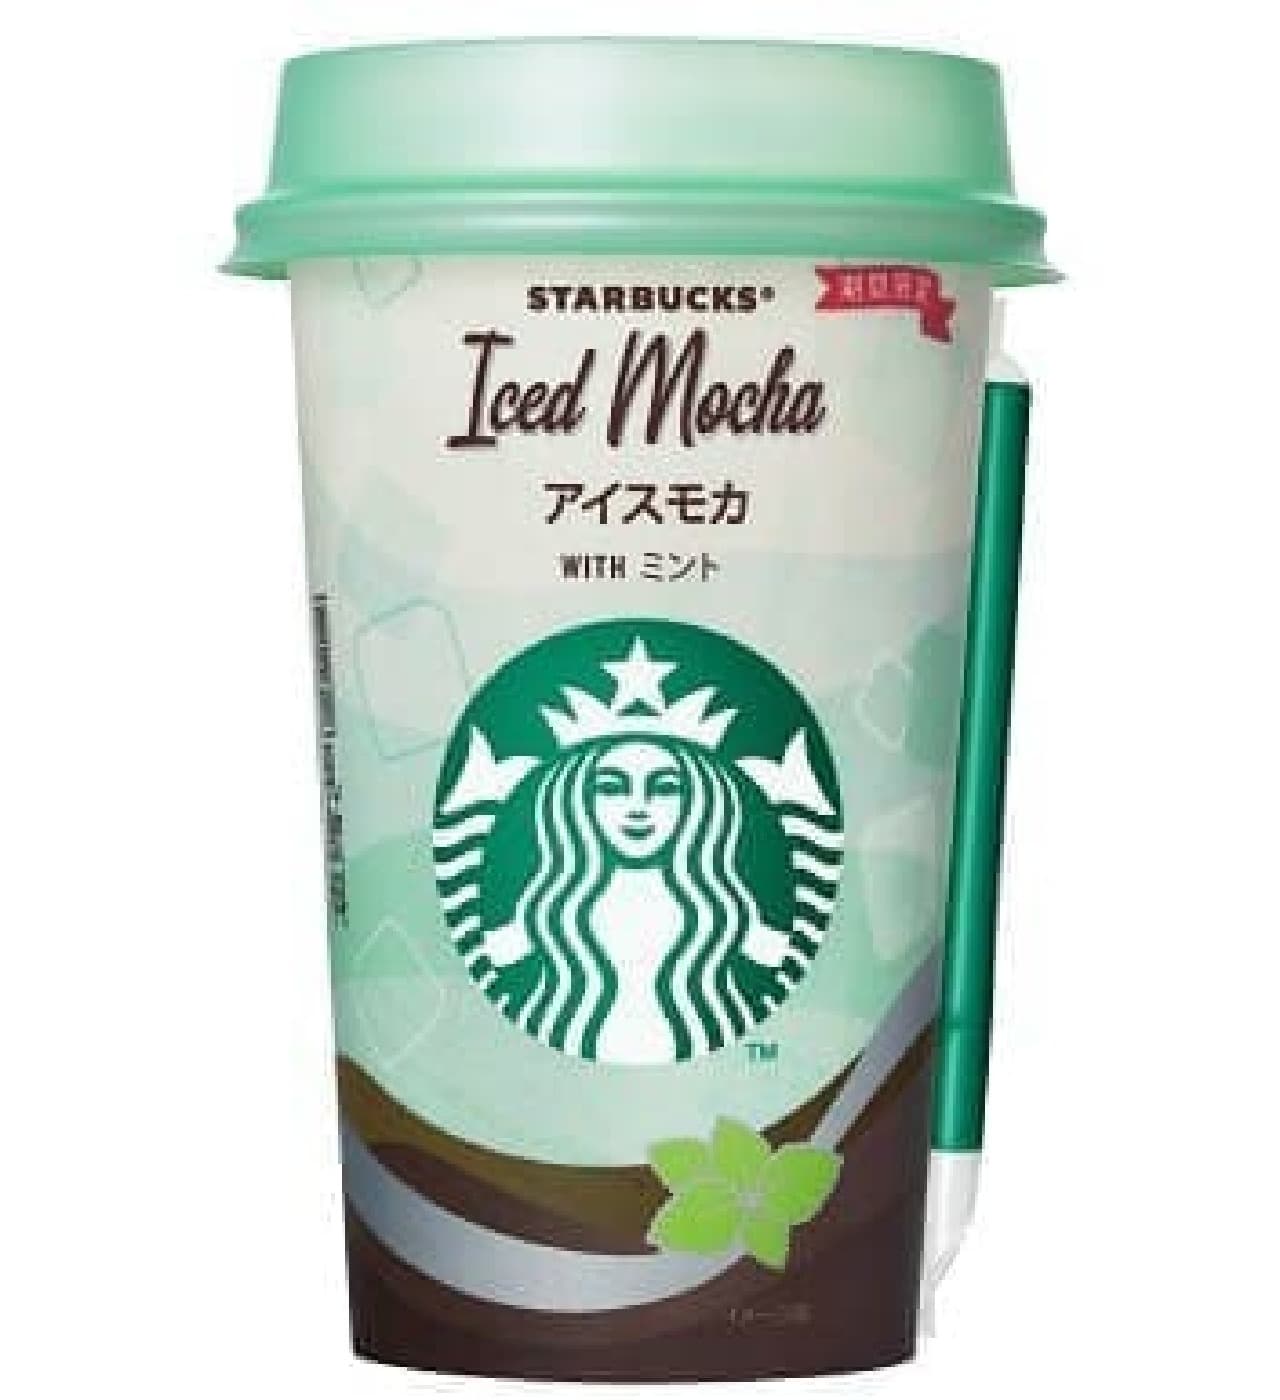 "Starbucks Ice Mocha WITH Mintha"